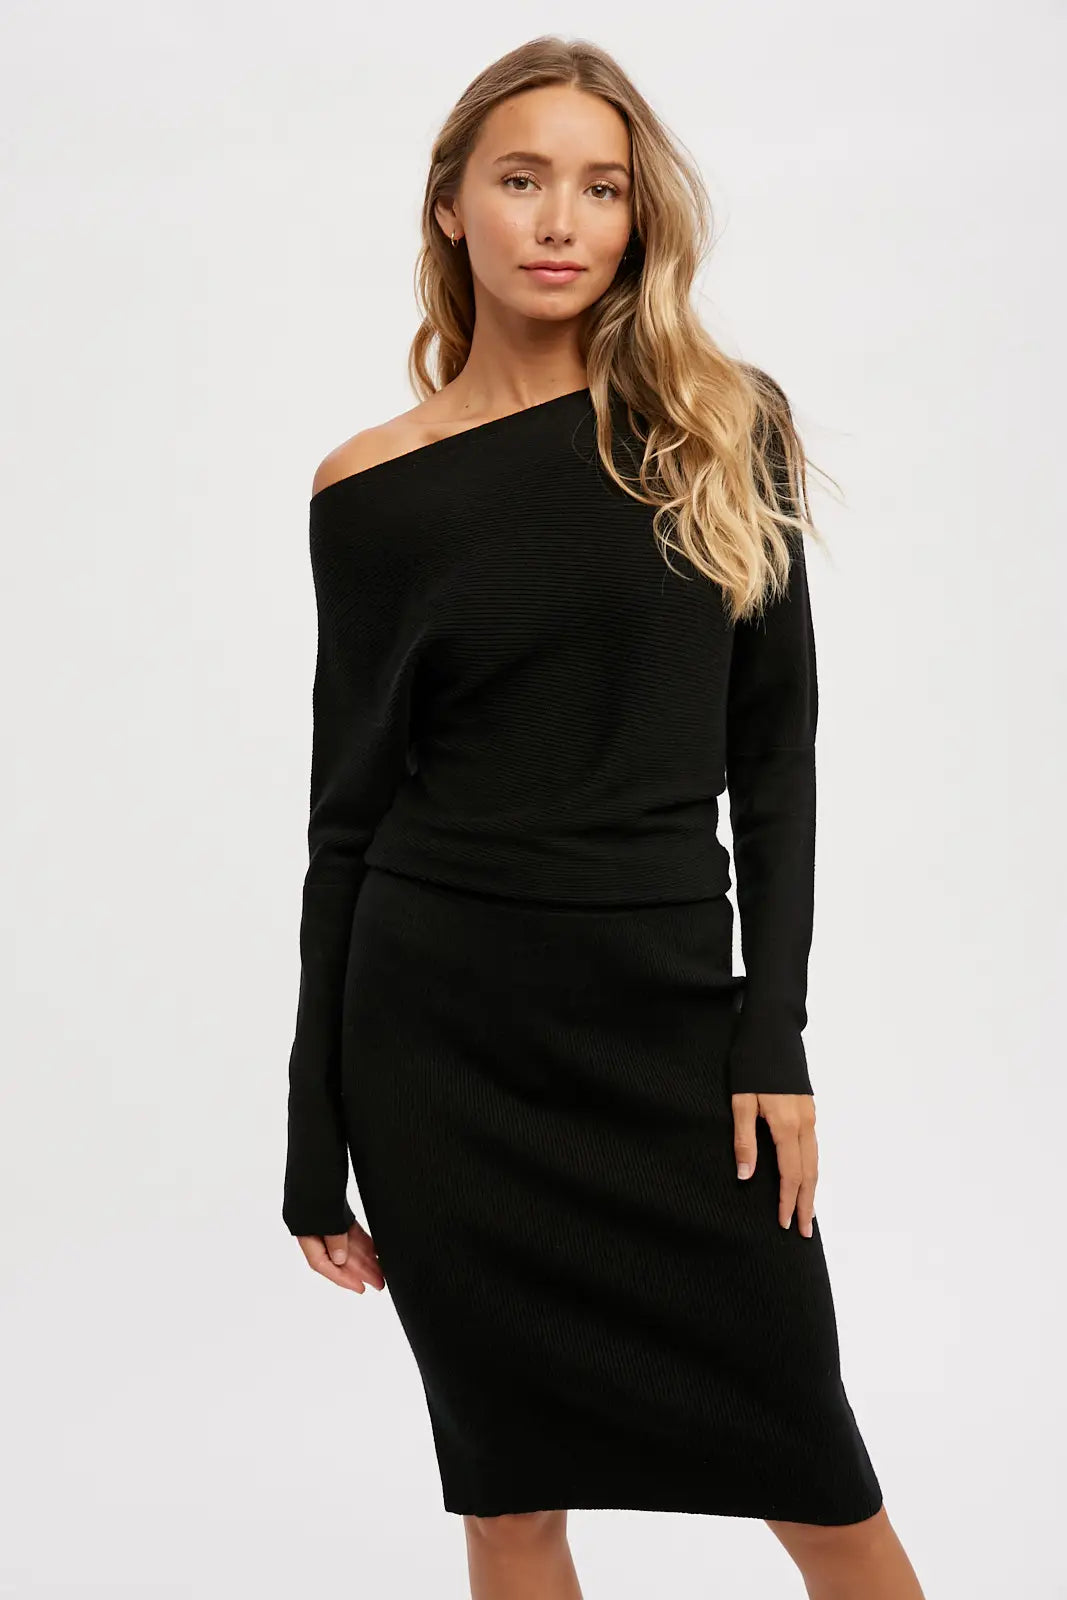 Open Shoulder Black Sweater Dress